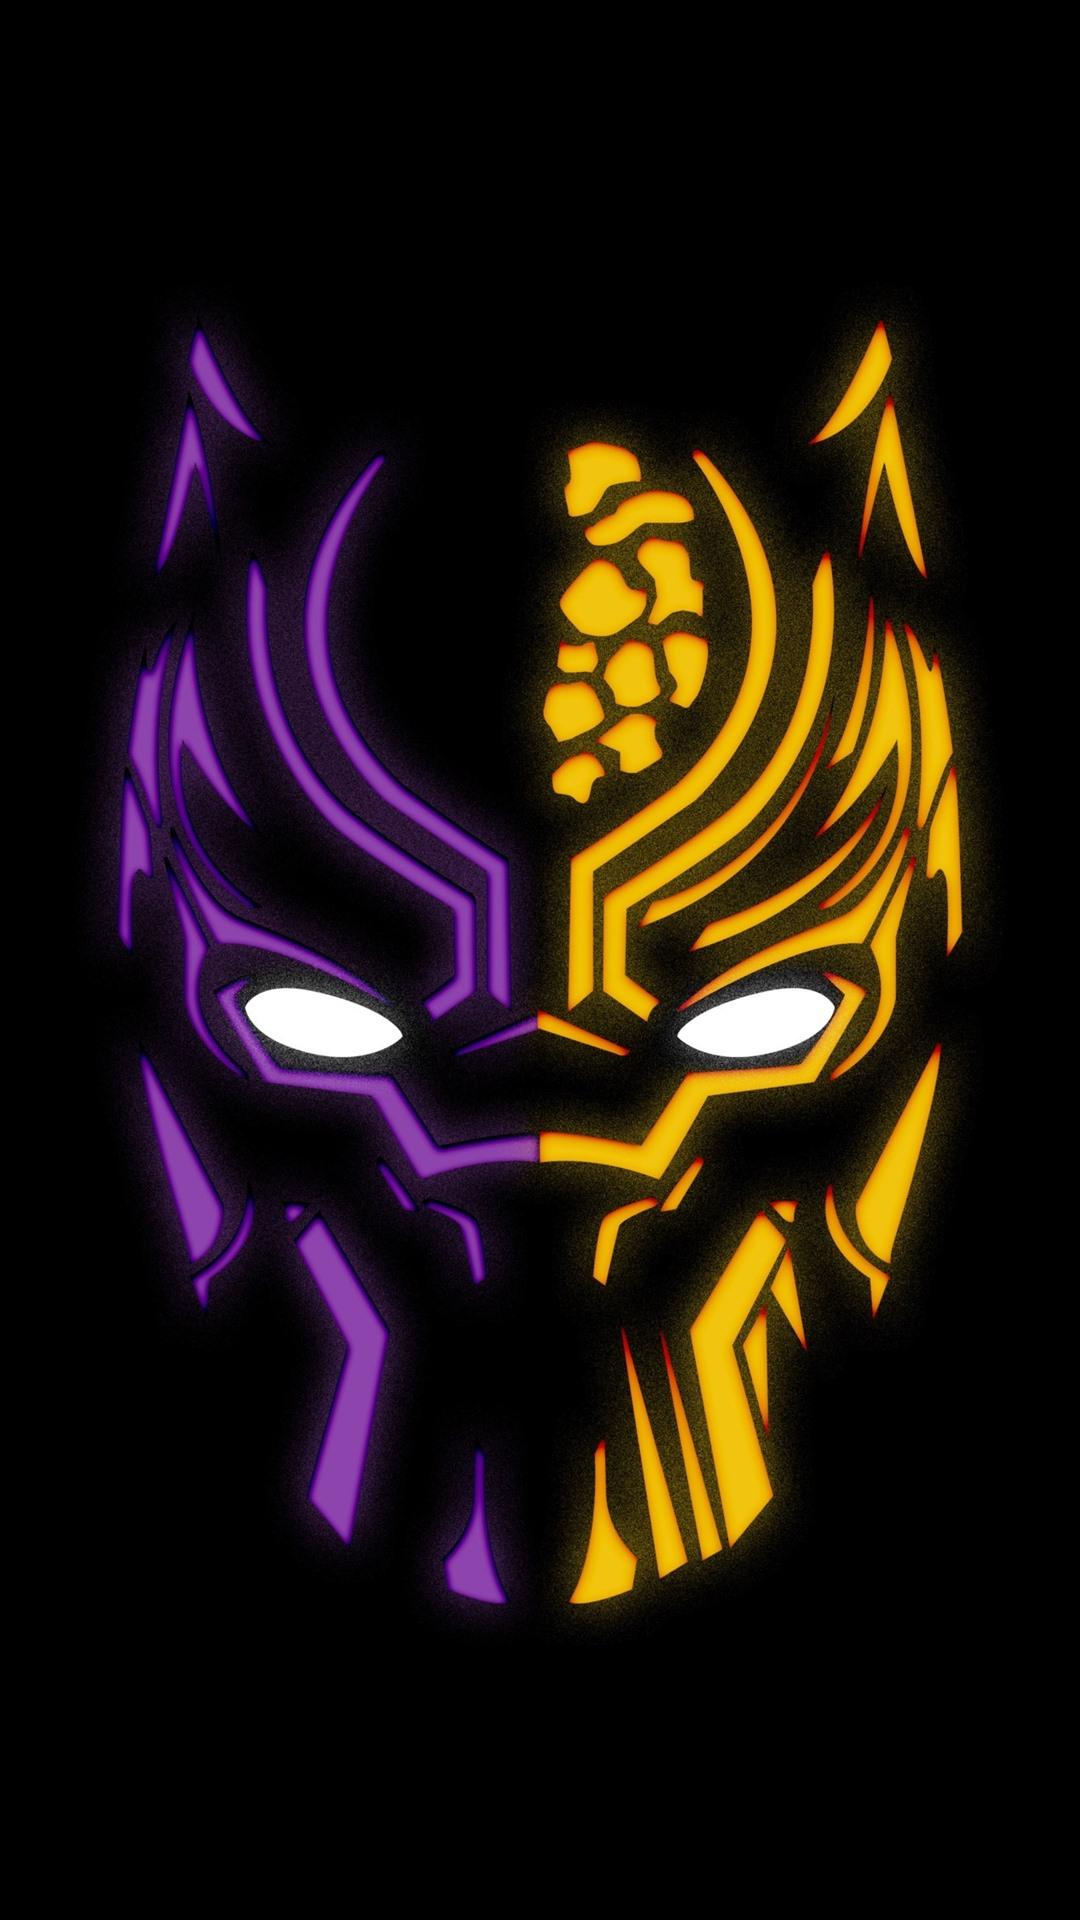 Vibrant 'Dark Panther' Lightning Wallpaper - Live Wallpaper - free download